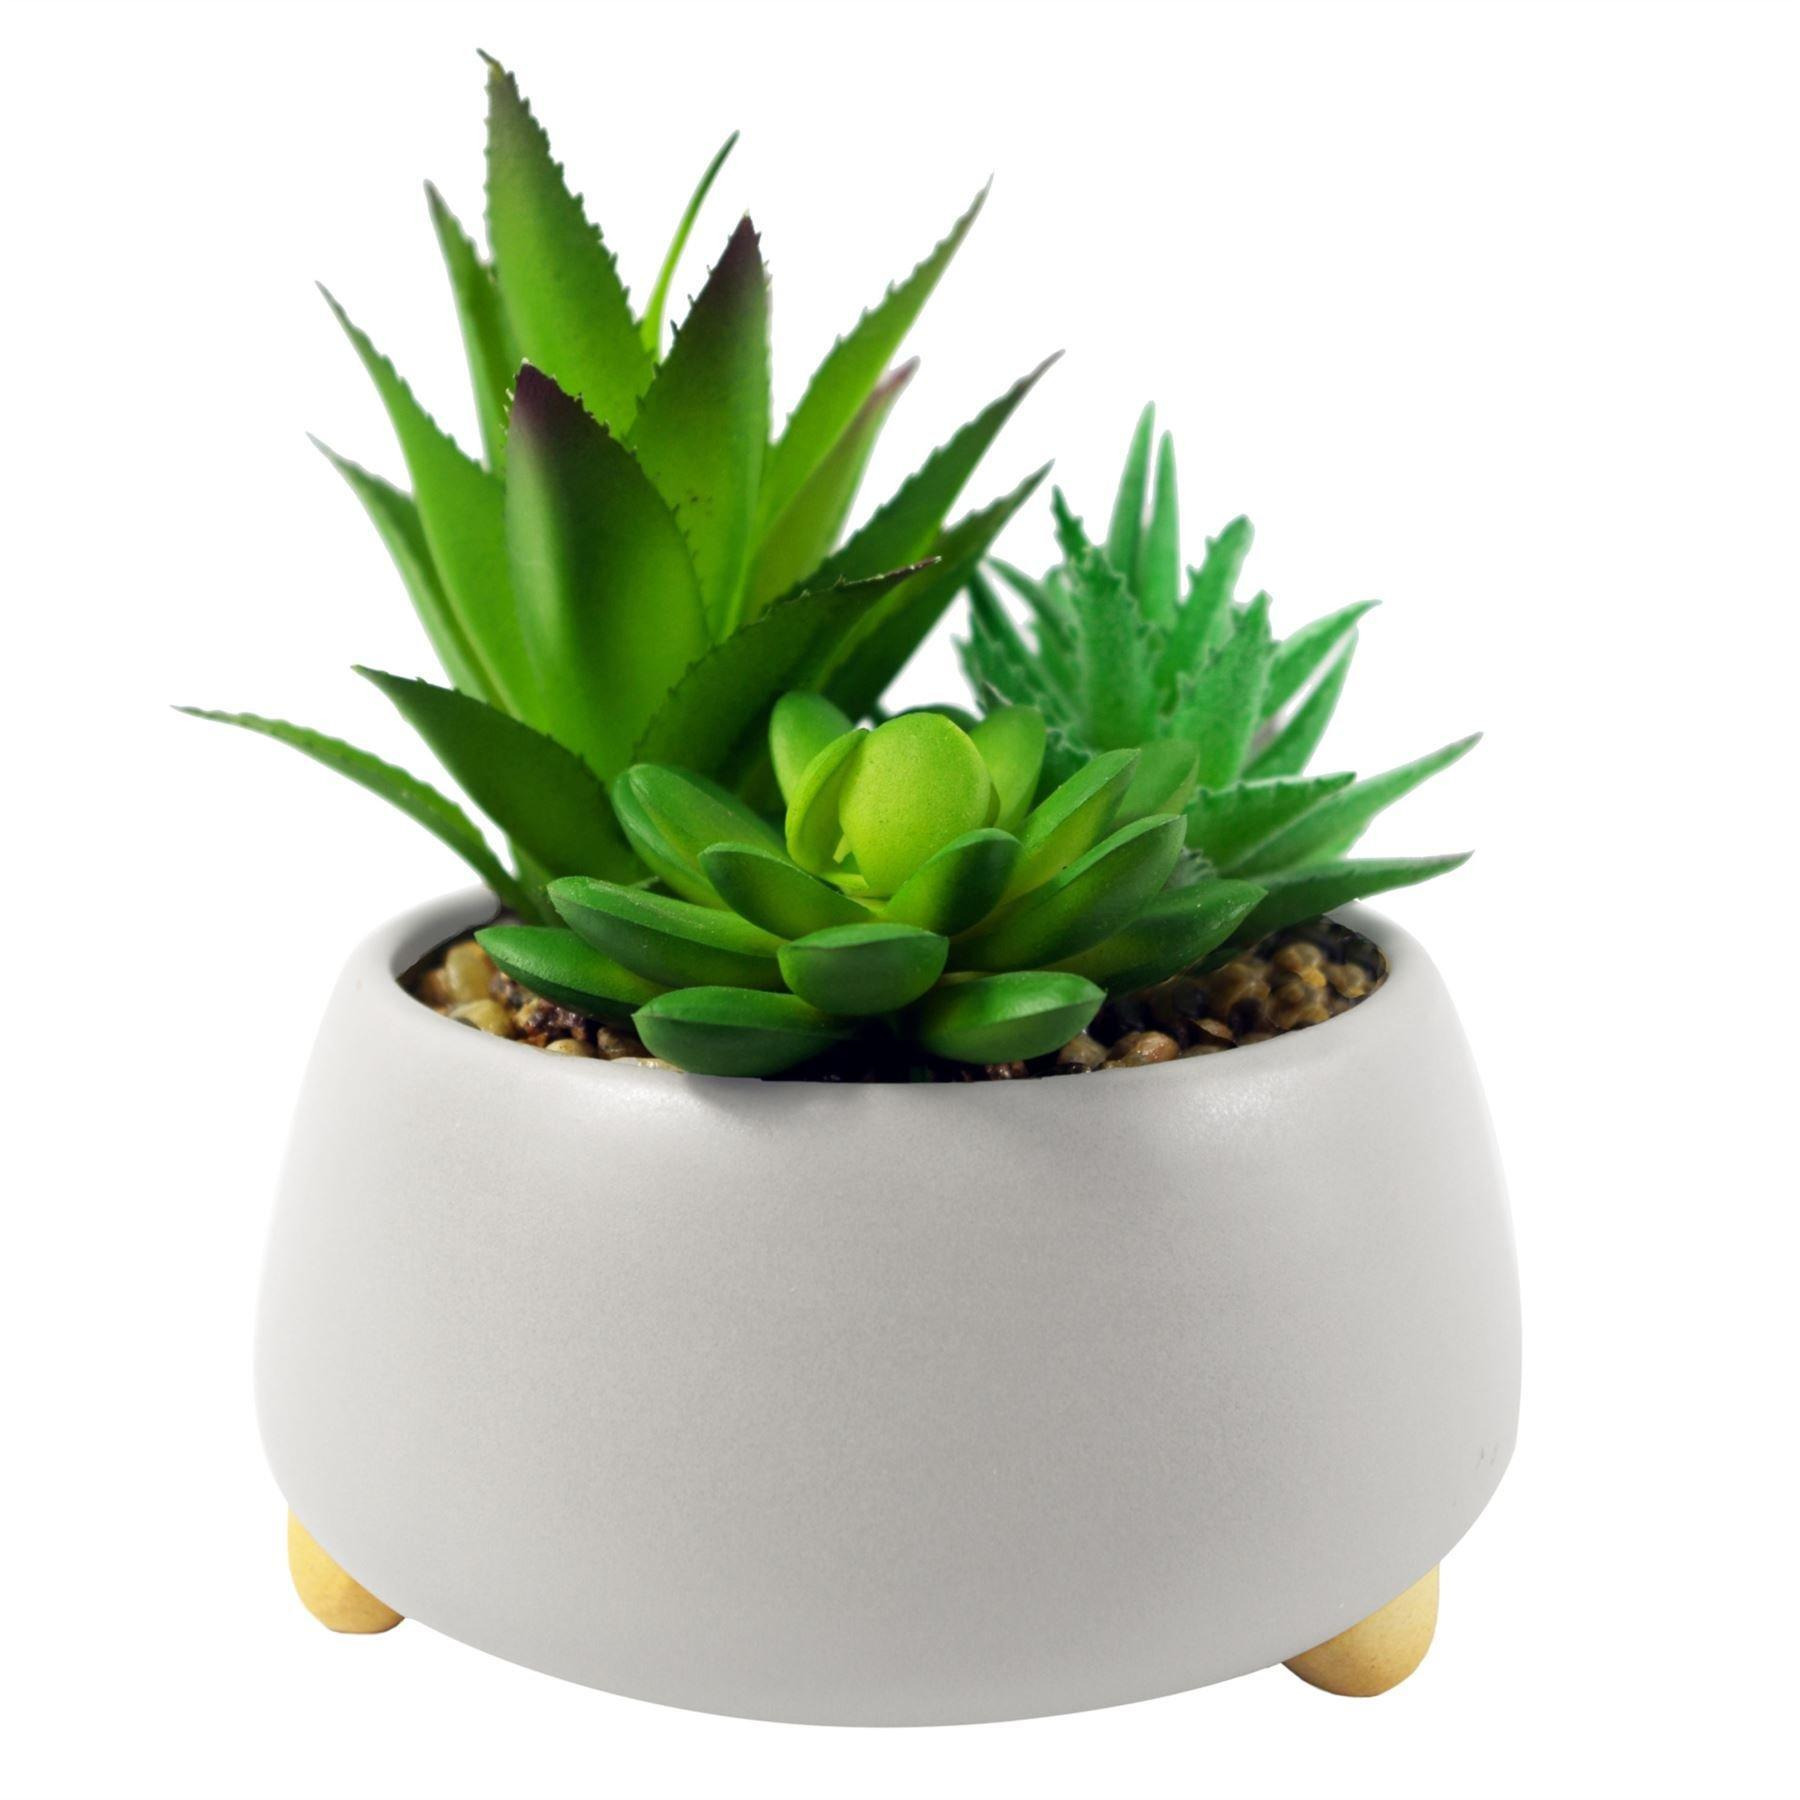 12cm Ceramic Pebble White Planter with Three Artificial Succulent Plants - image 1